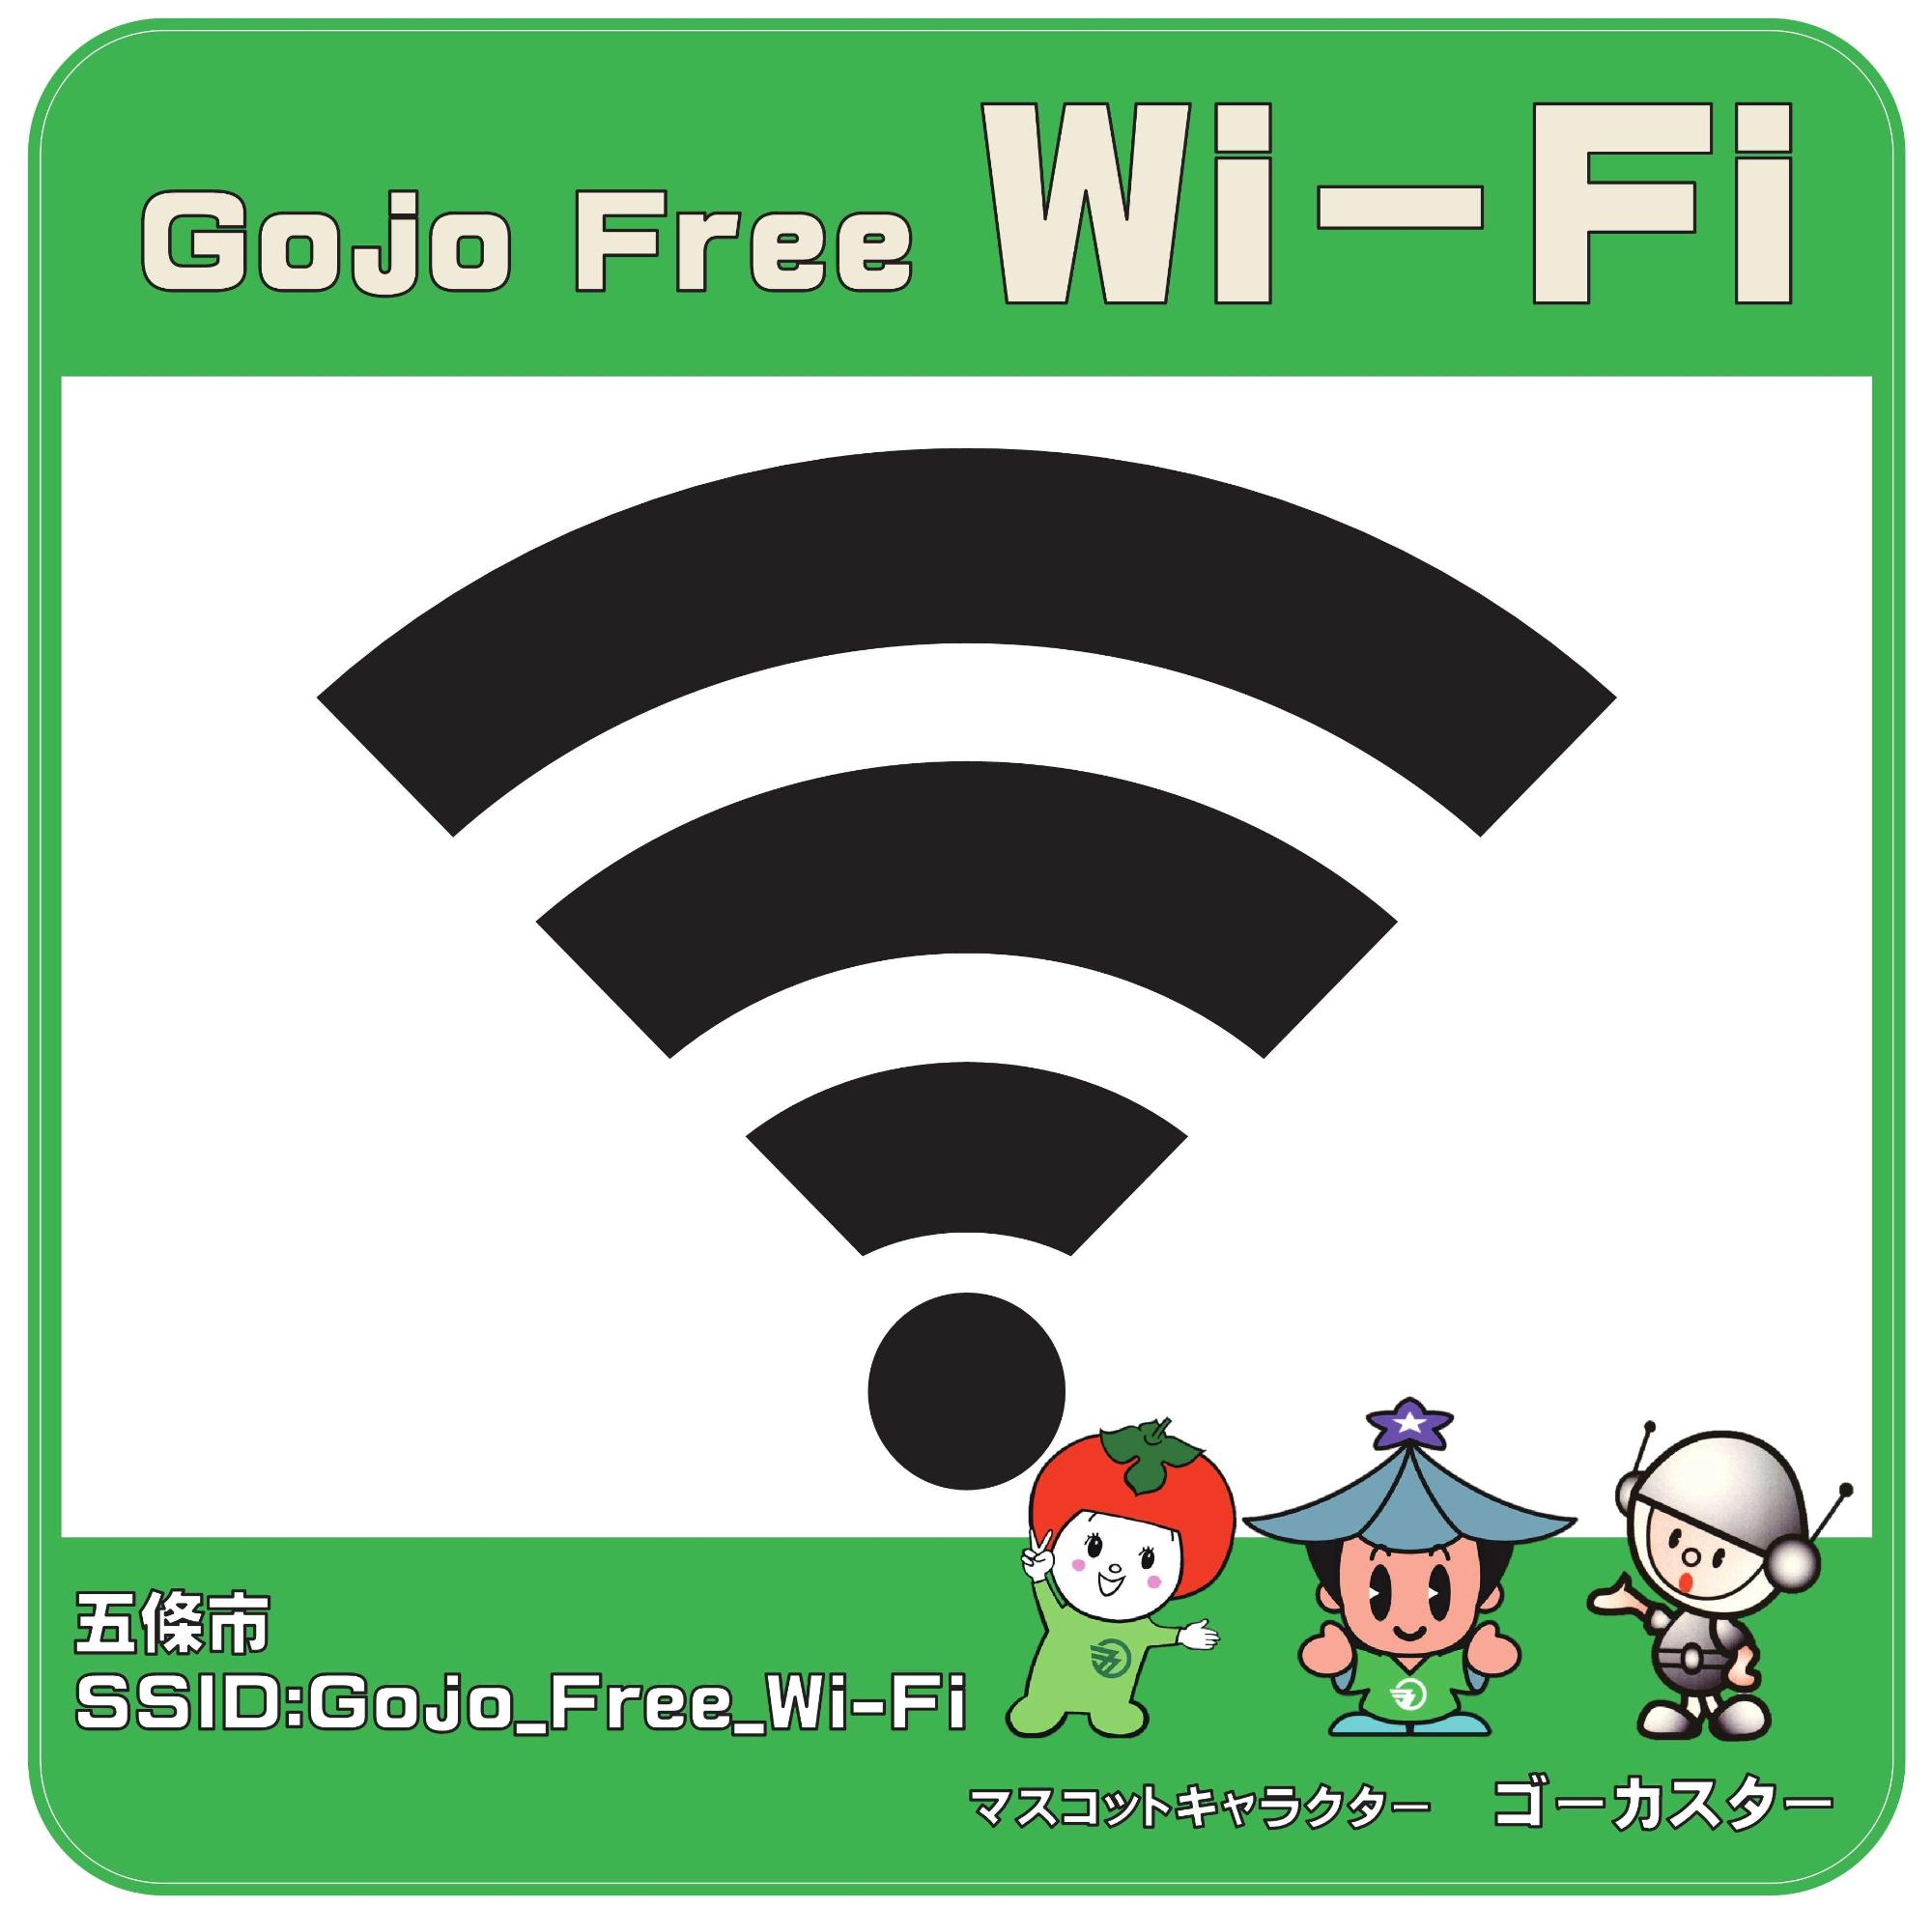 Gojo Free Wi-Fi（ワイファイ） 五條市 SSID:Gojo_Free_Wi-Fi マスコットキャラクター ゴーカスター